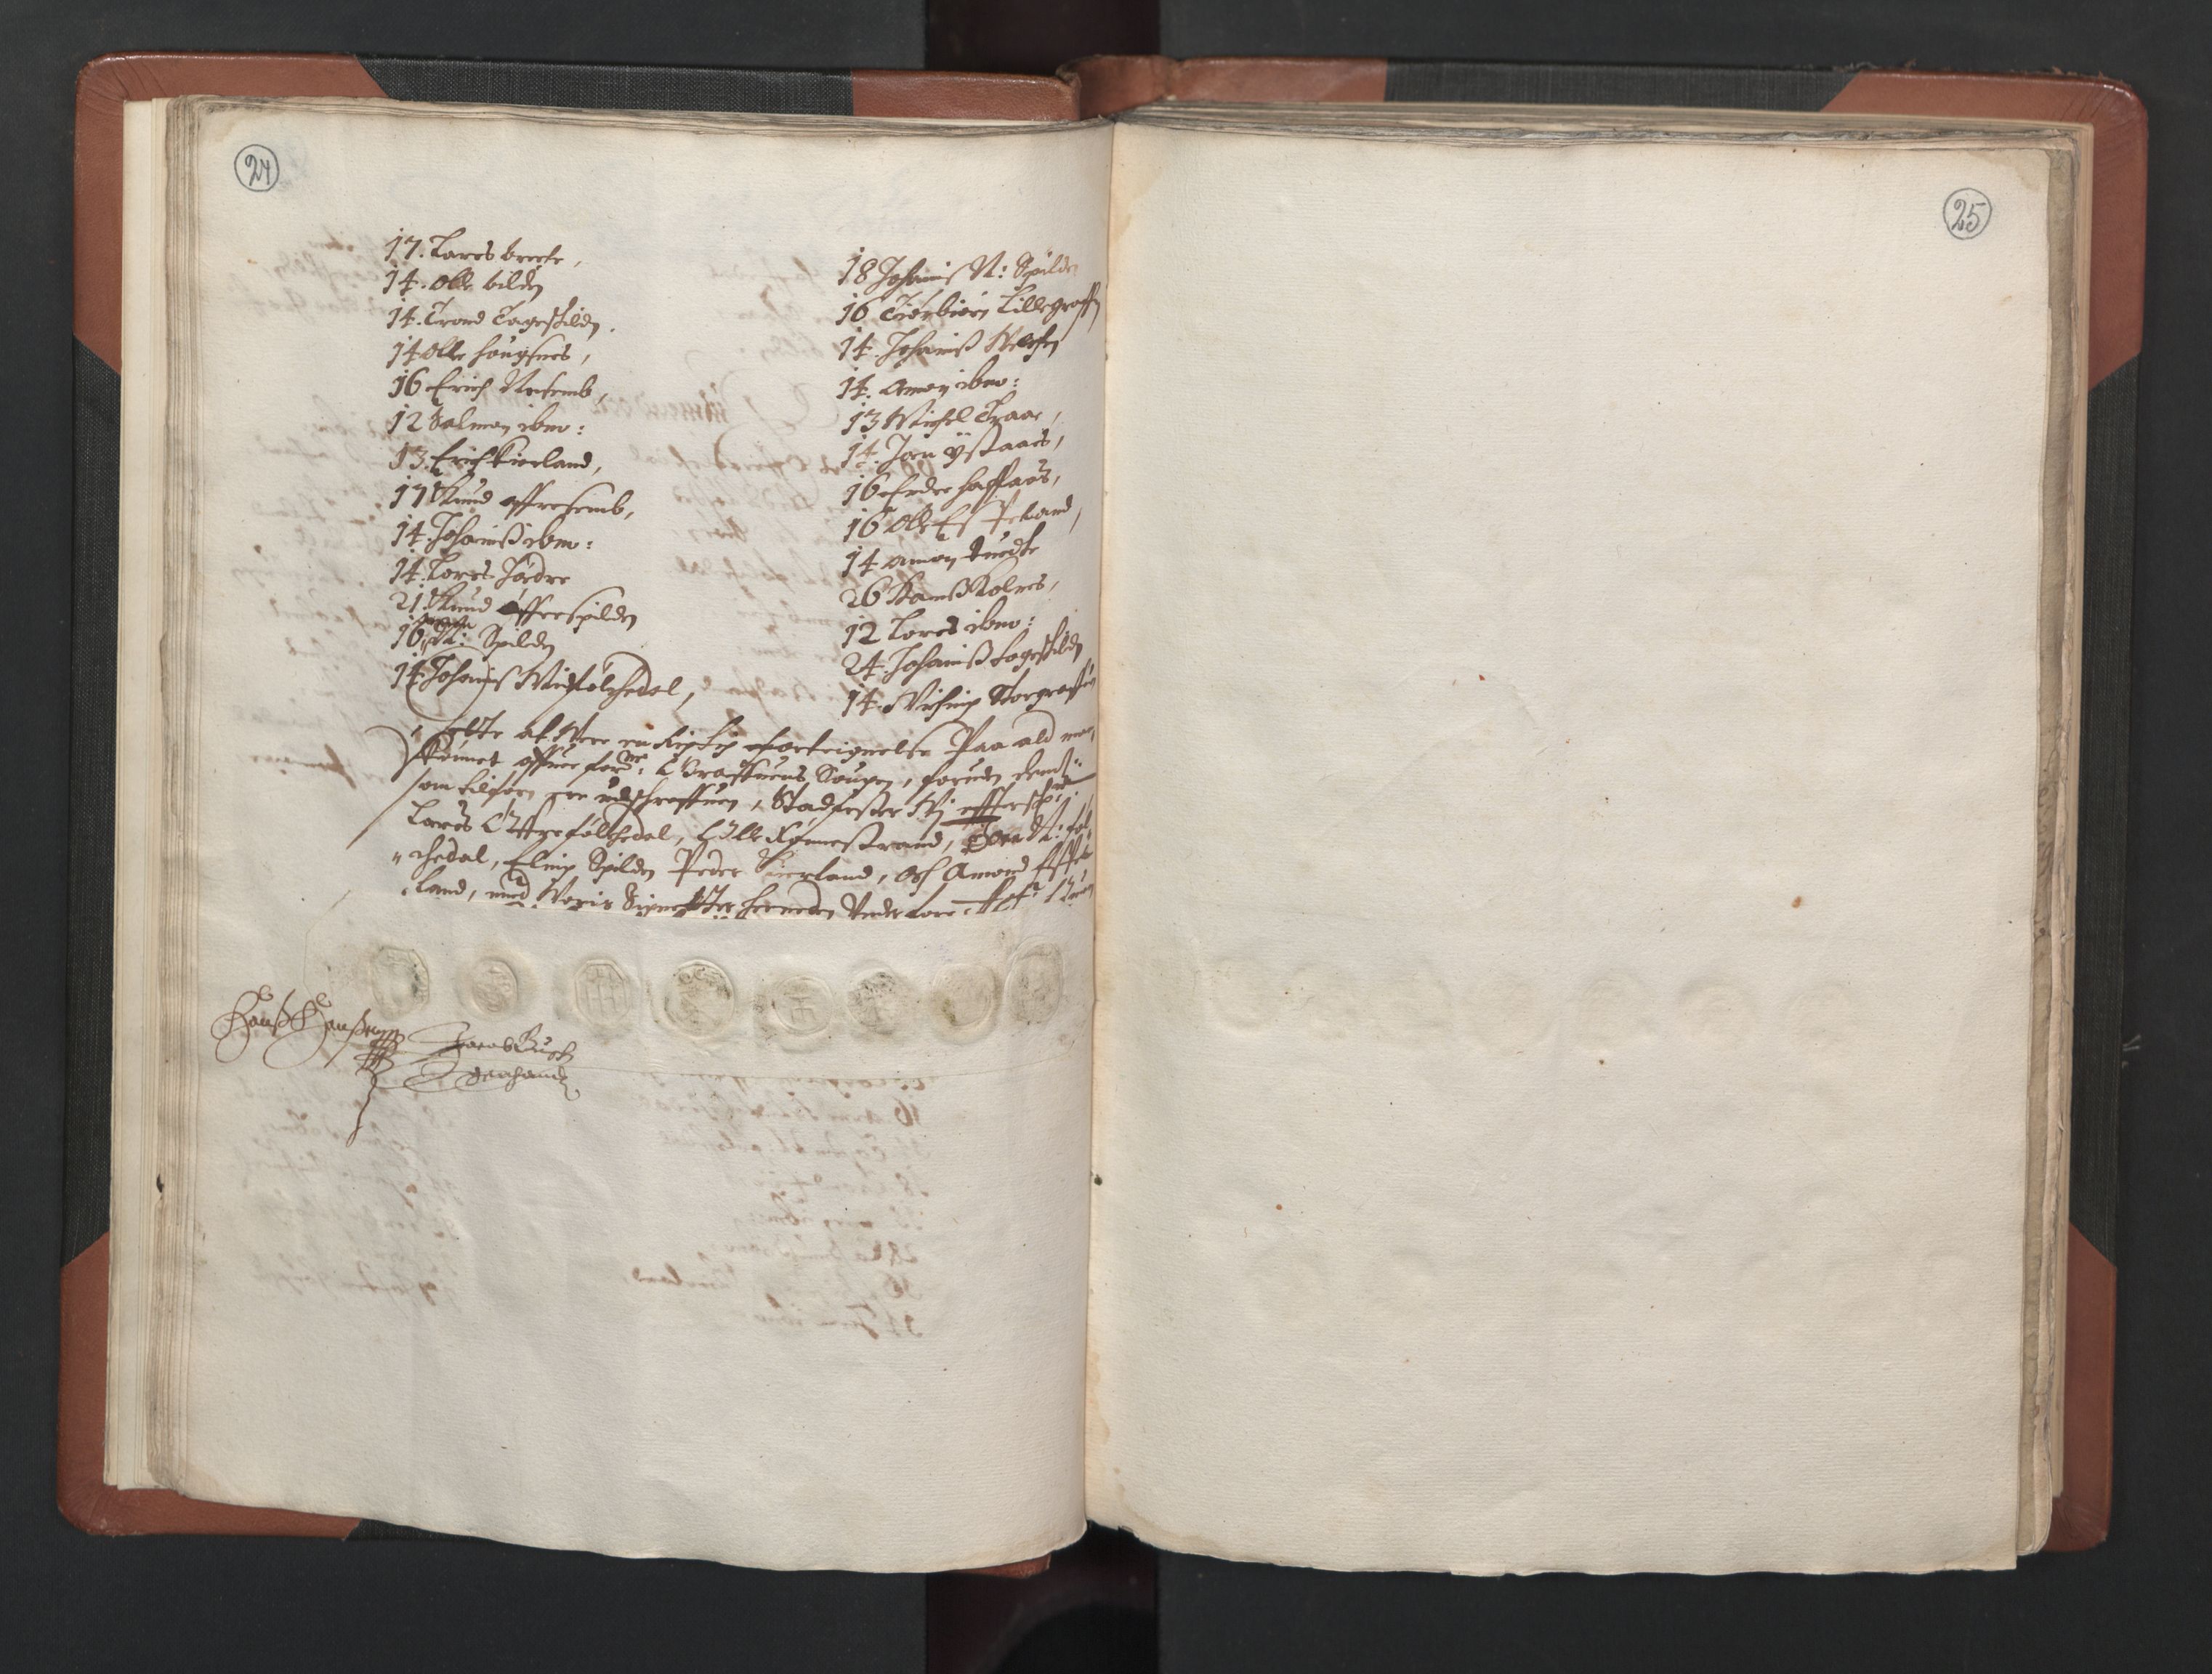 RA, Fogdenes og sorenskrivernes manntall 1664-1666, nr. 14: Hardanger len, Ytre Sogn fogderi og Indre Sogn fogderi, 1664-1665, s. 24-25